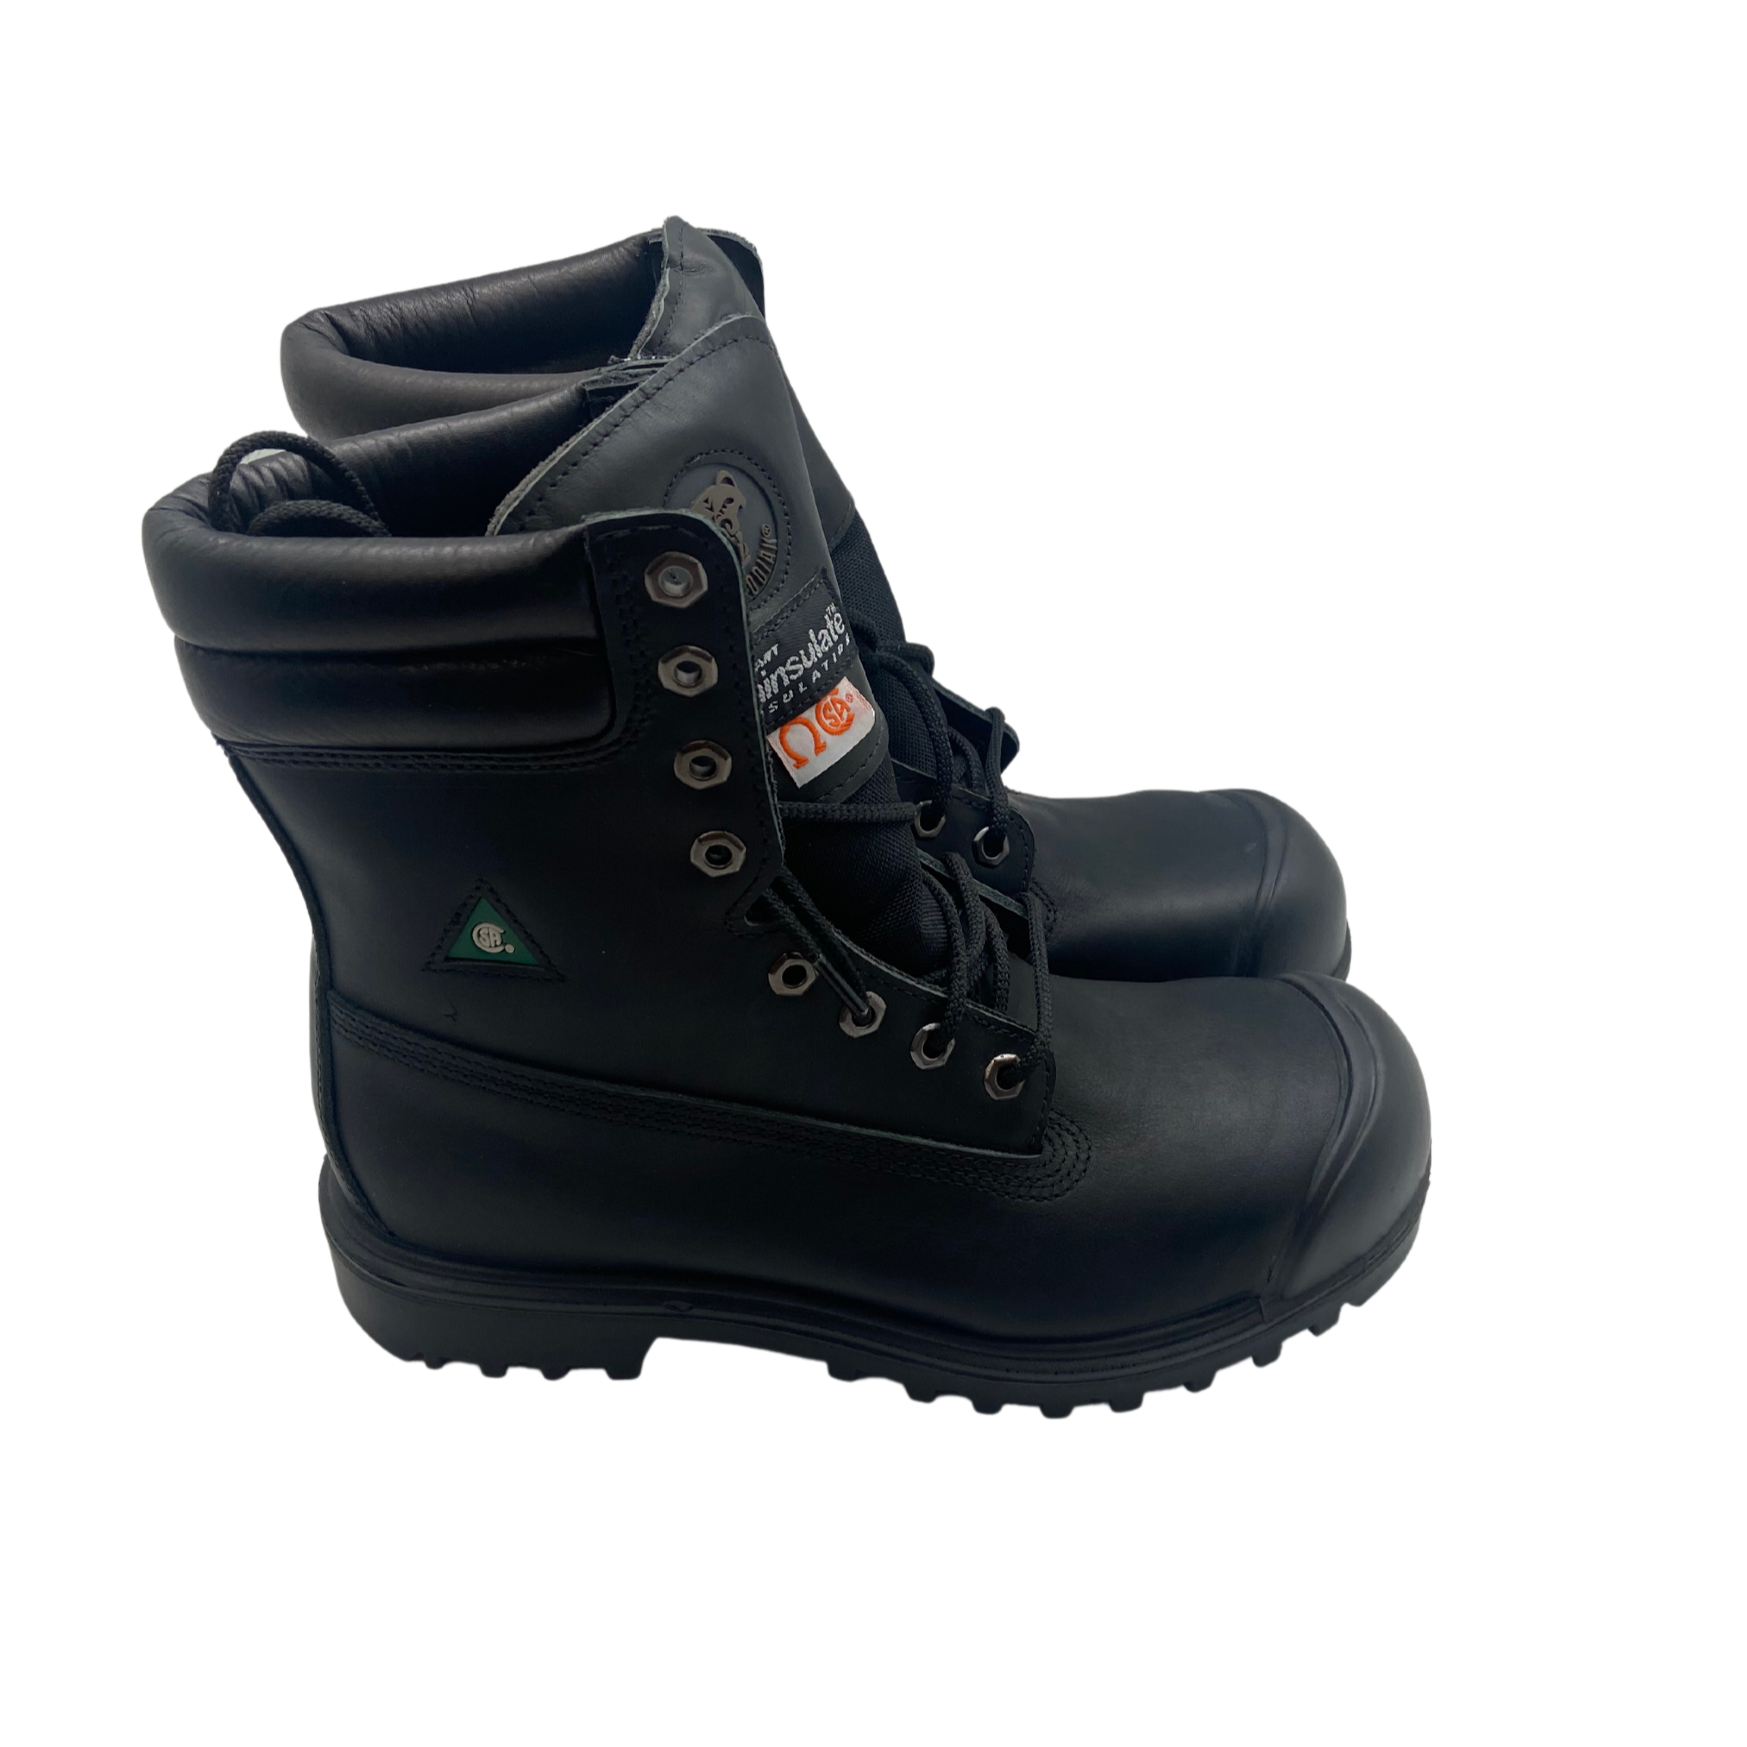 Kodiak: Men's Work Boots / LiteStorm / Tall / Black / Lace Up / Size 7 ...